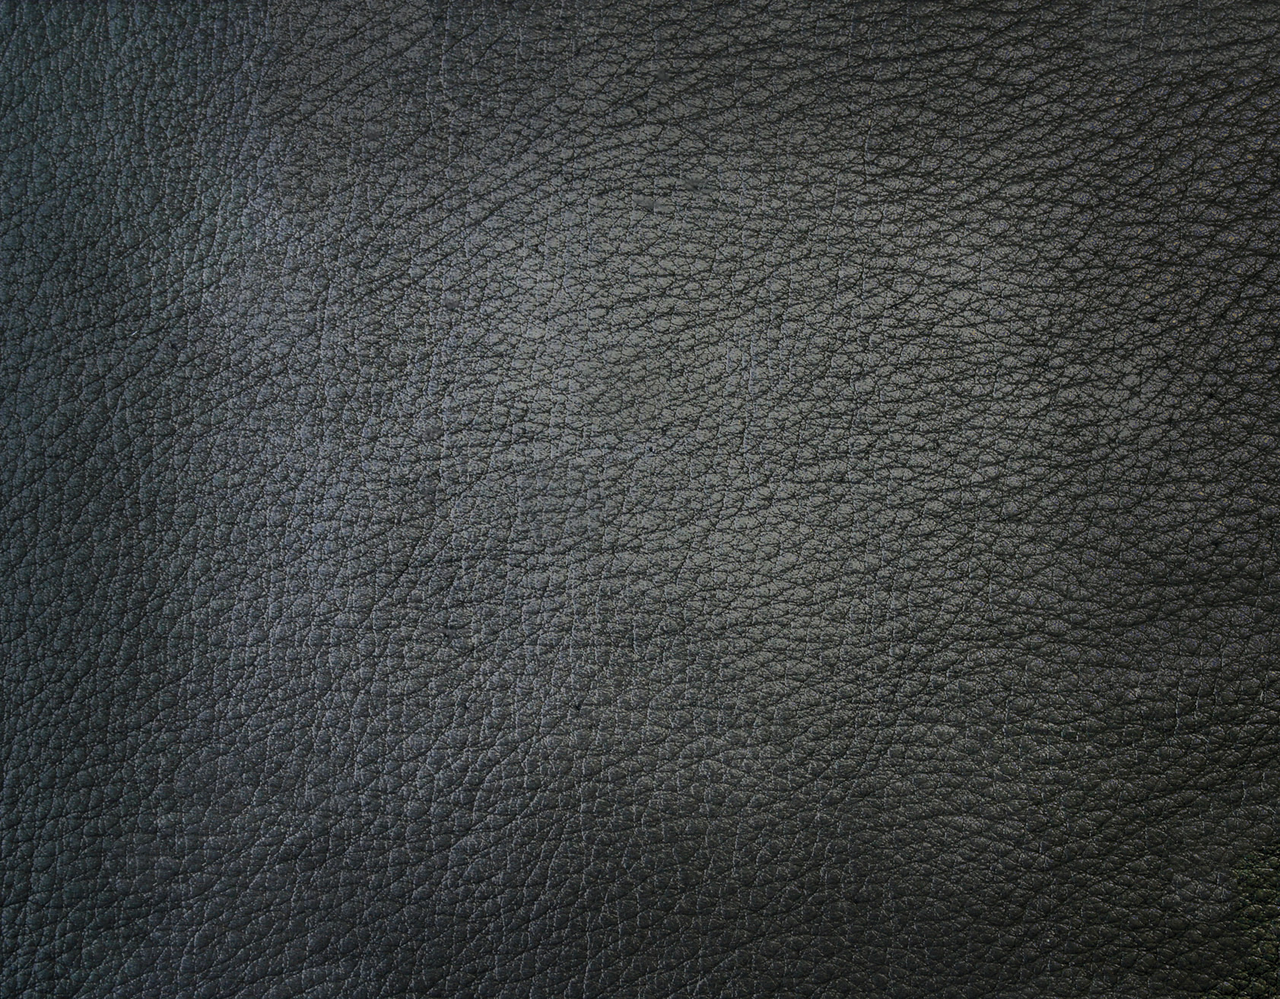 Black Leather Wallpaper by MKadriovski on deviantART